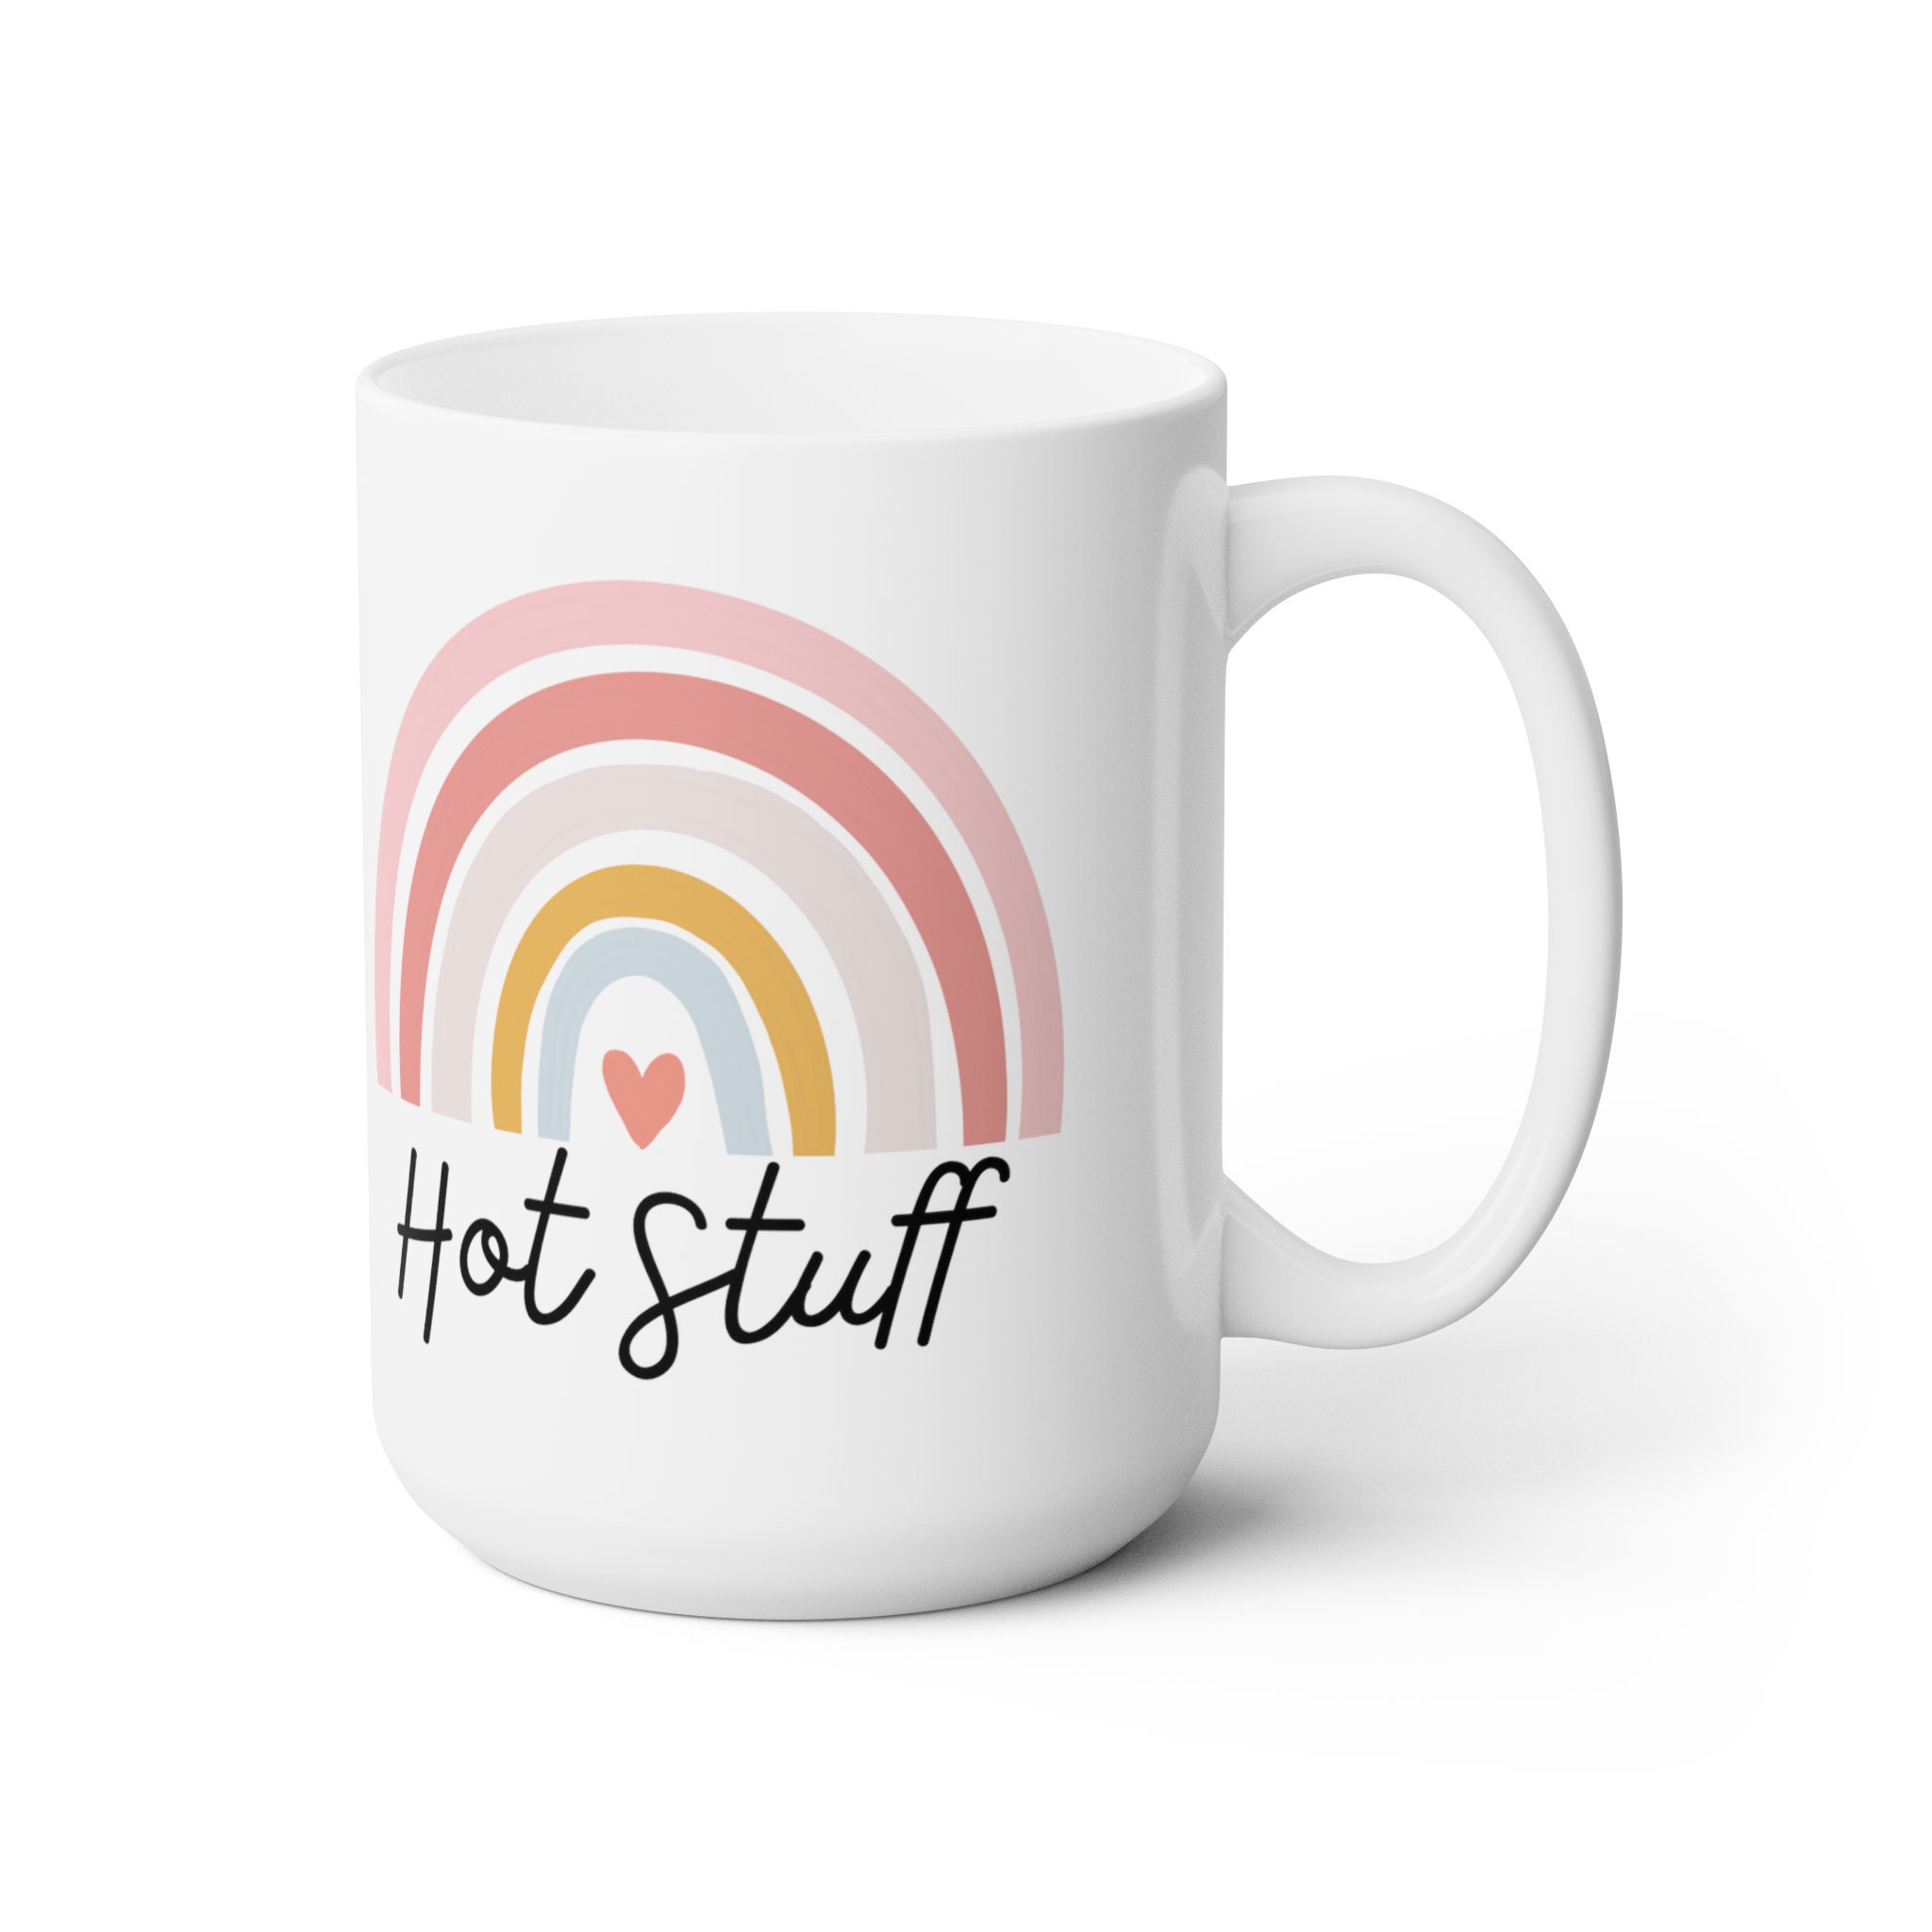 Hot Stuff mug - perfect gift for tea and coffee lovers Coffee Mug